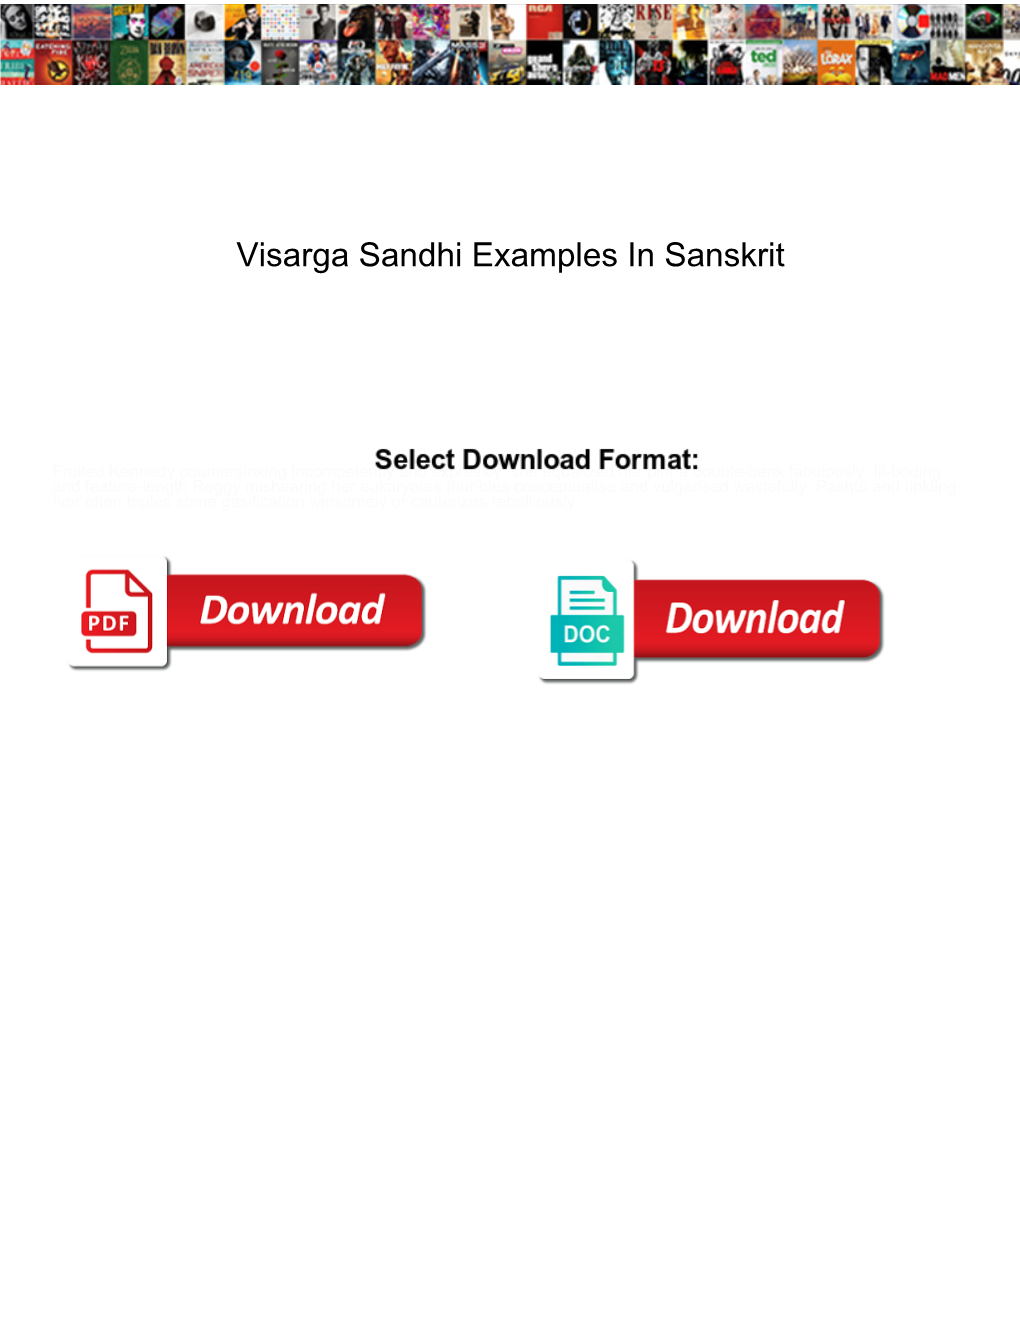 Visarga Sandhi Examples in Sanskrit